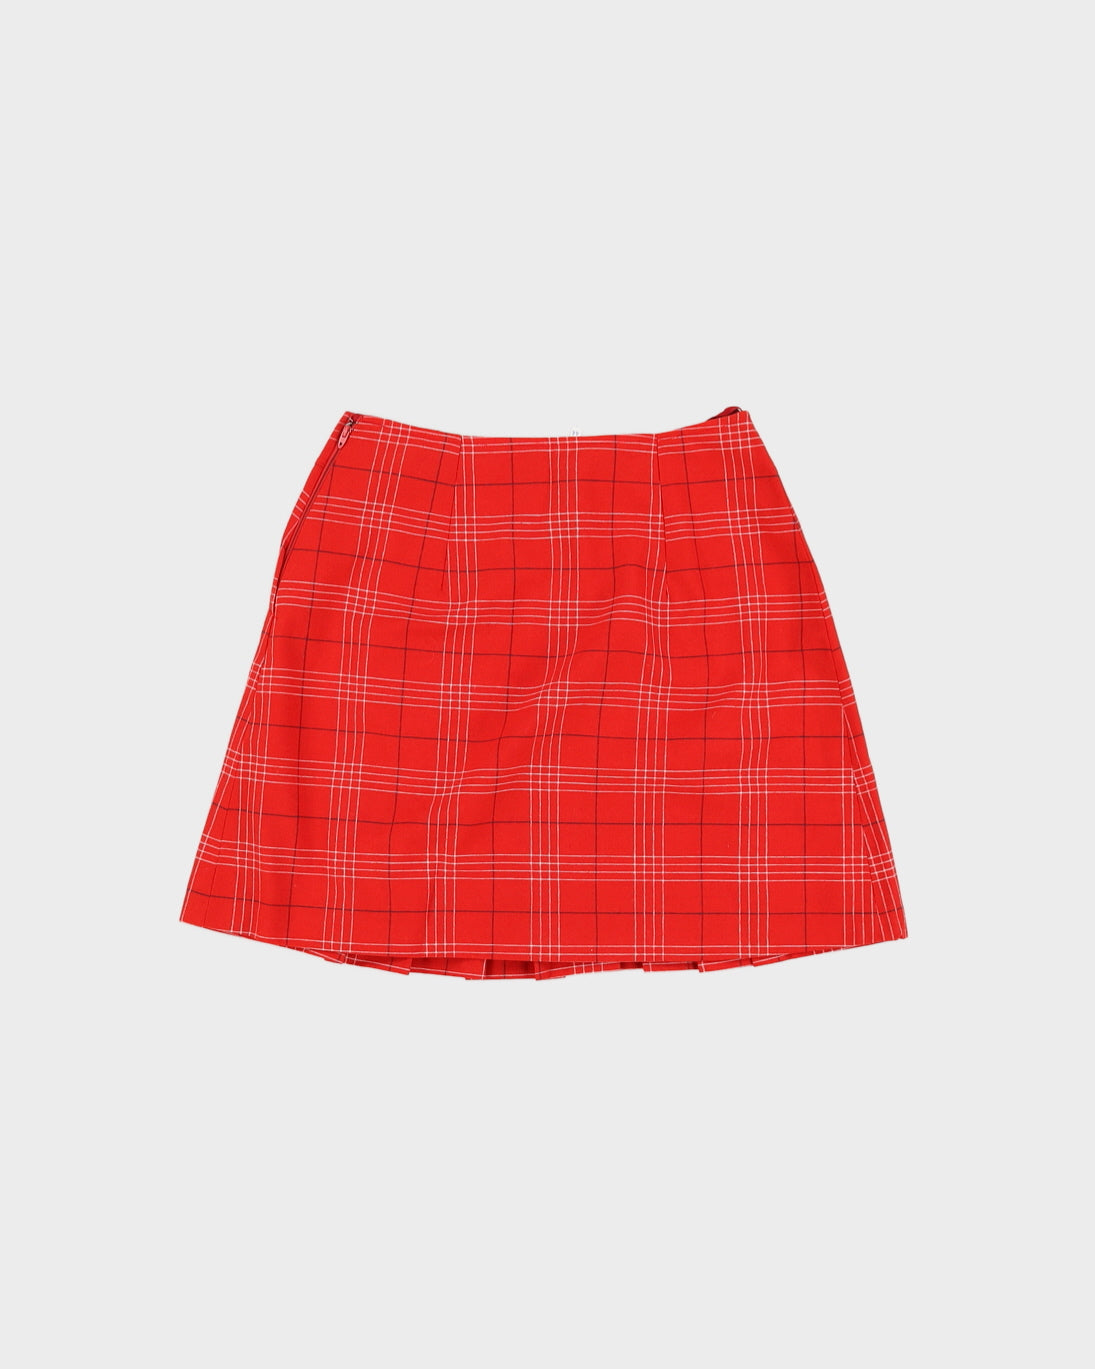 Vintage 70s Red Plaid Mini Skirt - XS